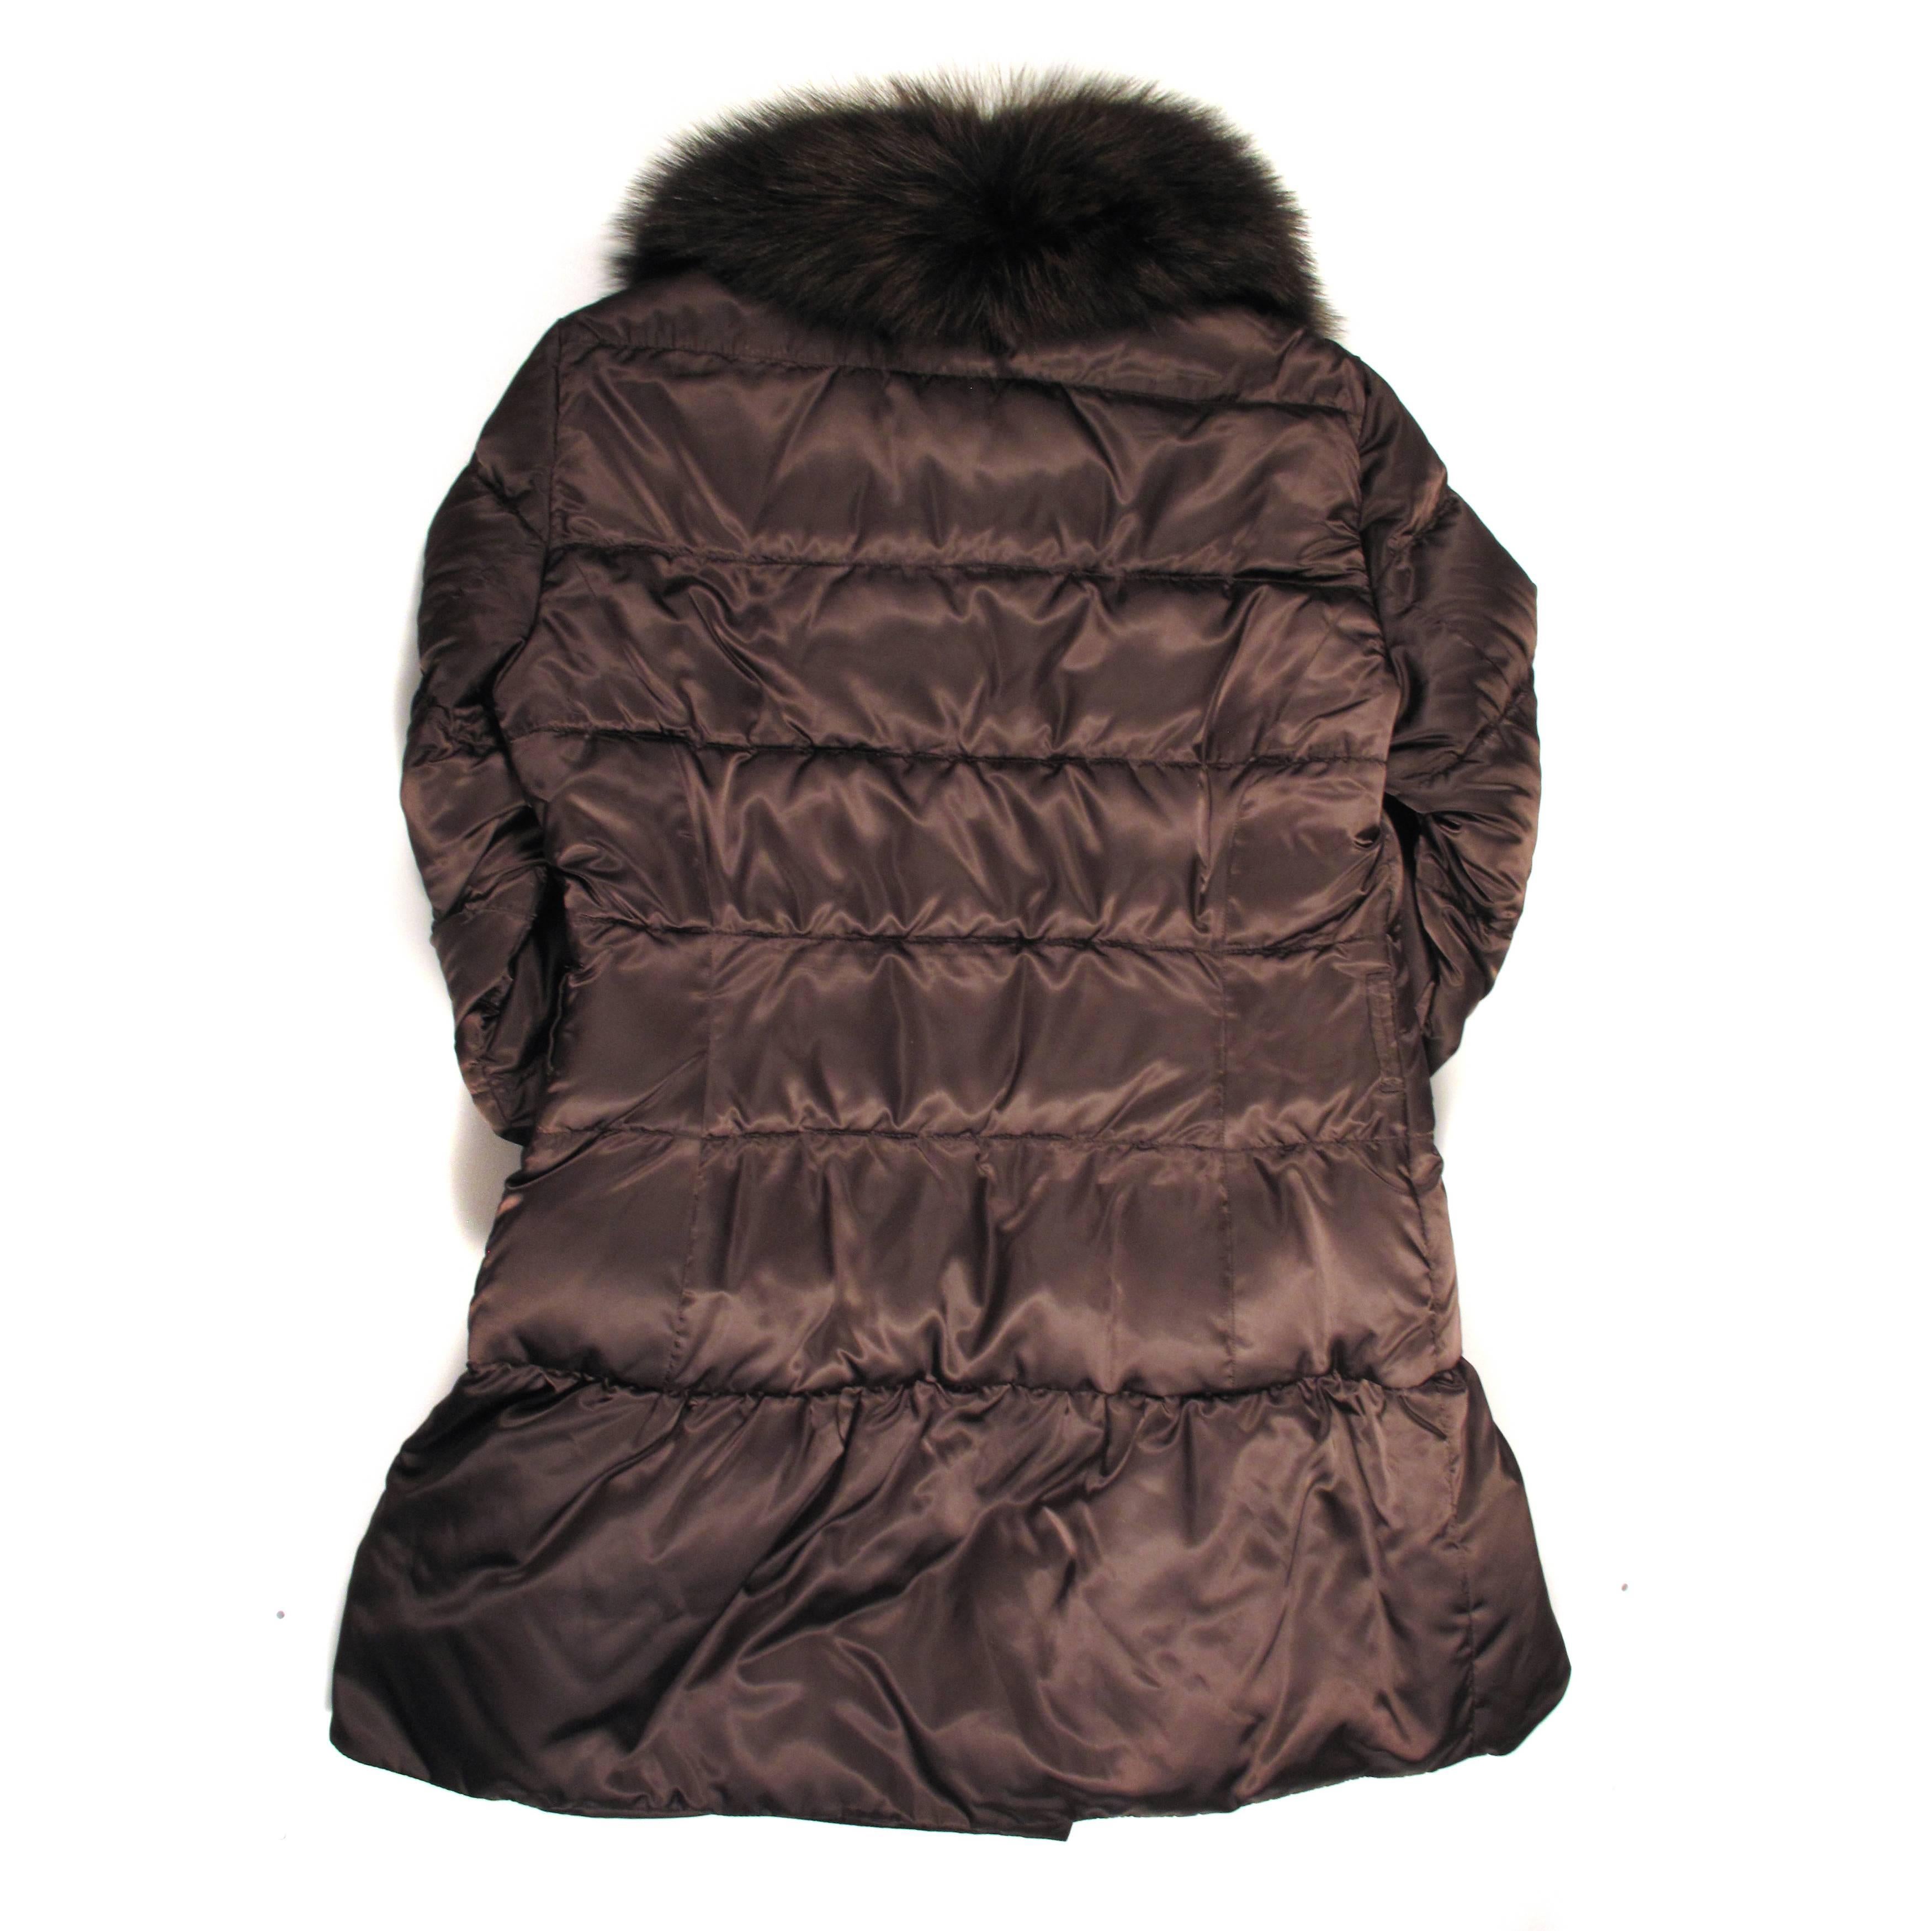 Prada - Down Jacket with Fur Collar

Retail: $2000.00

Size:  US 8 / 10 - 44

Color: Brown

Material:  Shell: 100% Nylon

Padding: 90% Down - 10% White Elderdown

Lining: 100% Nylon

Collar: Raccoon